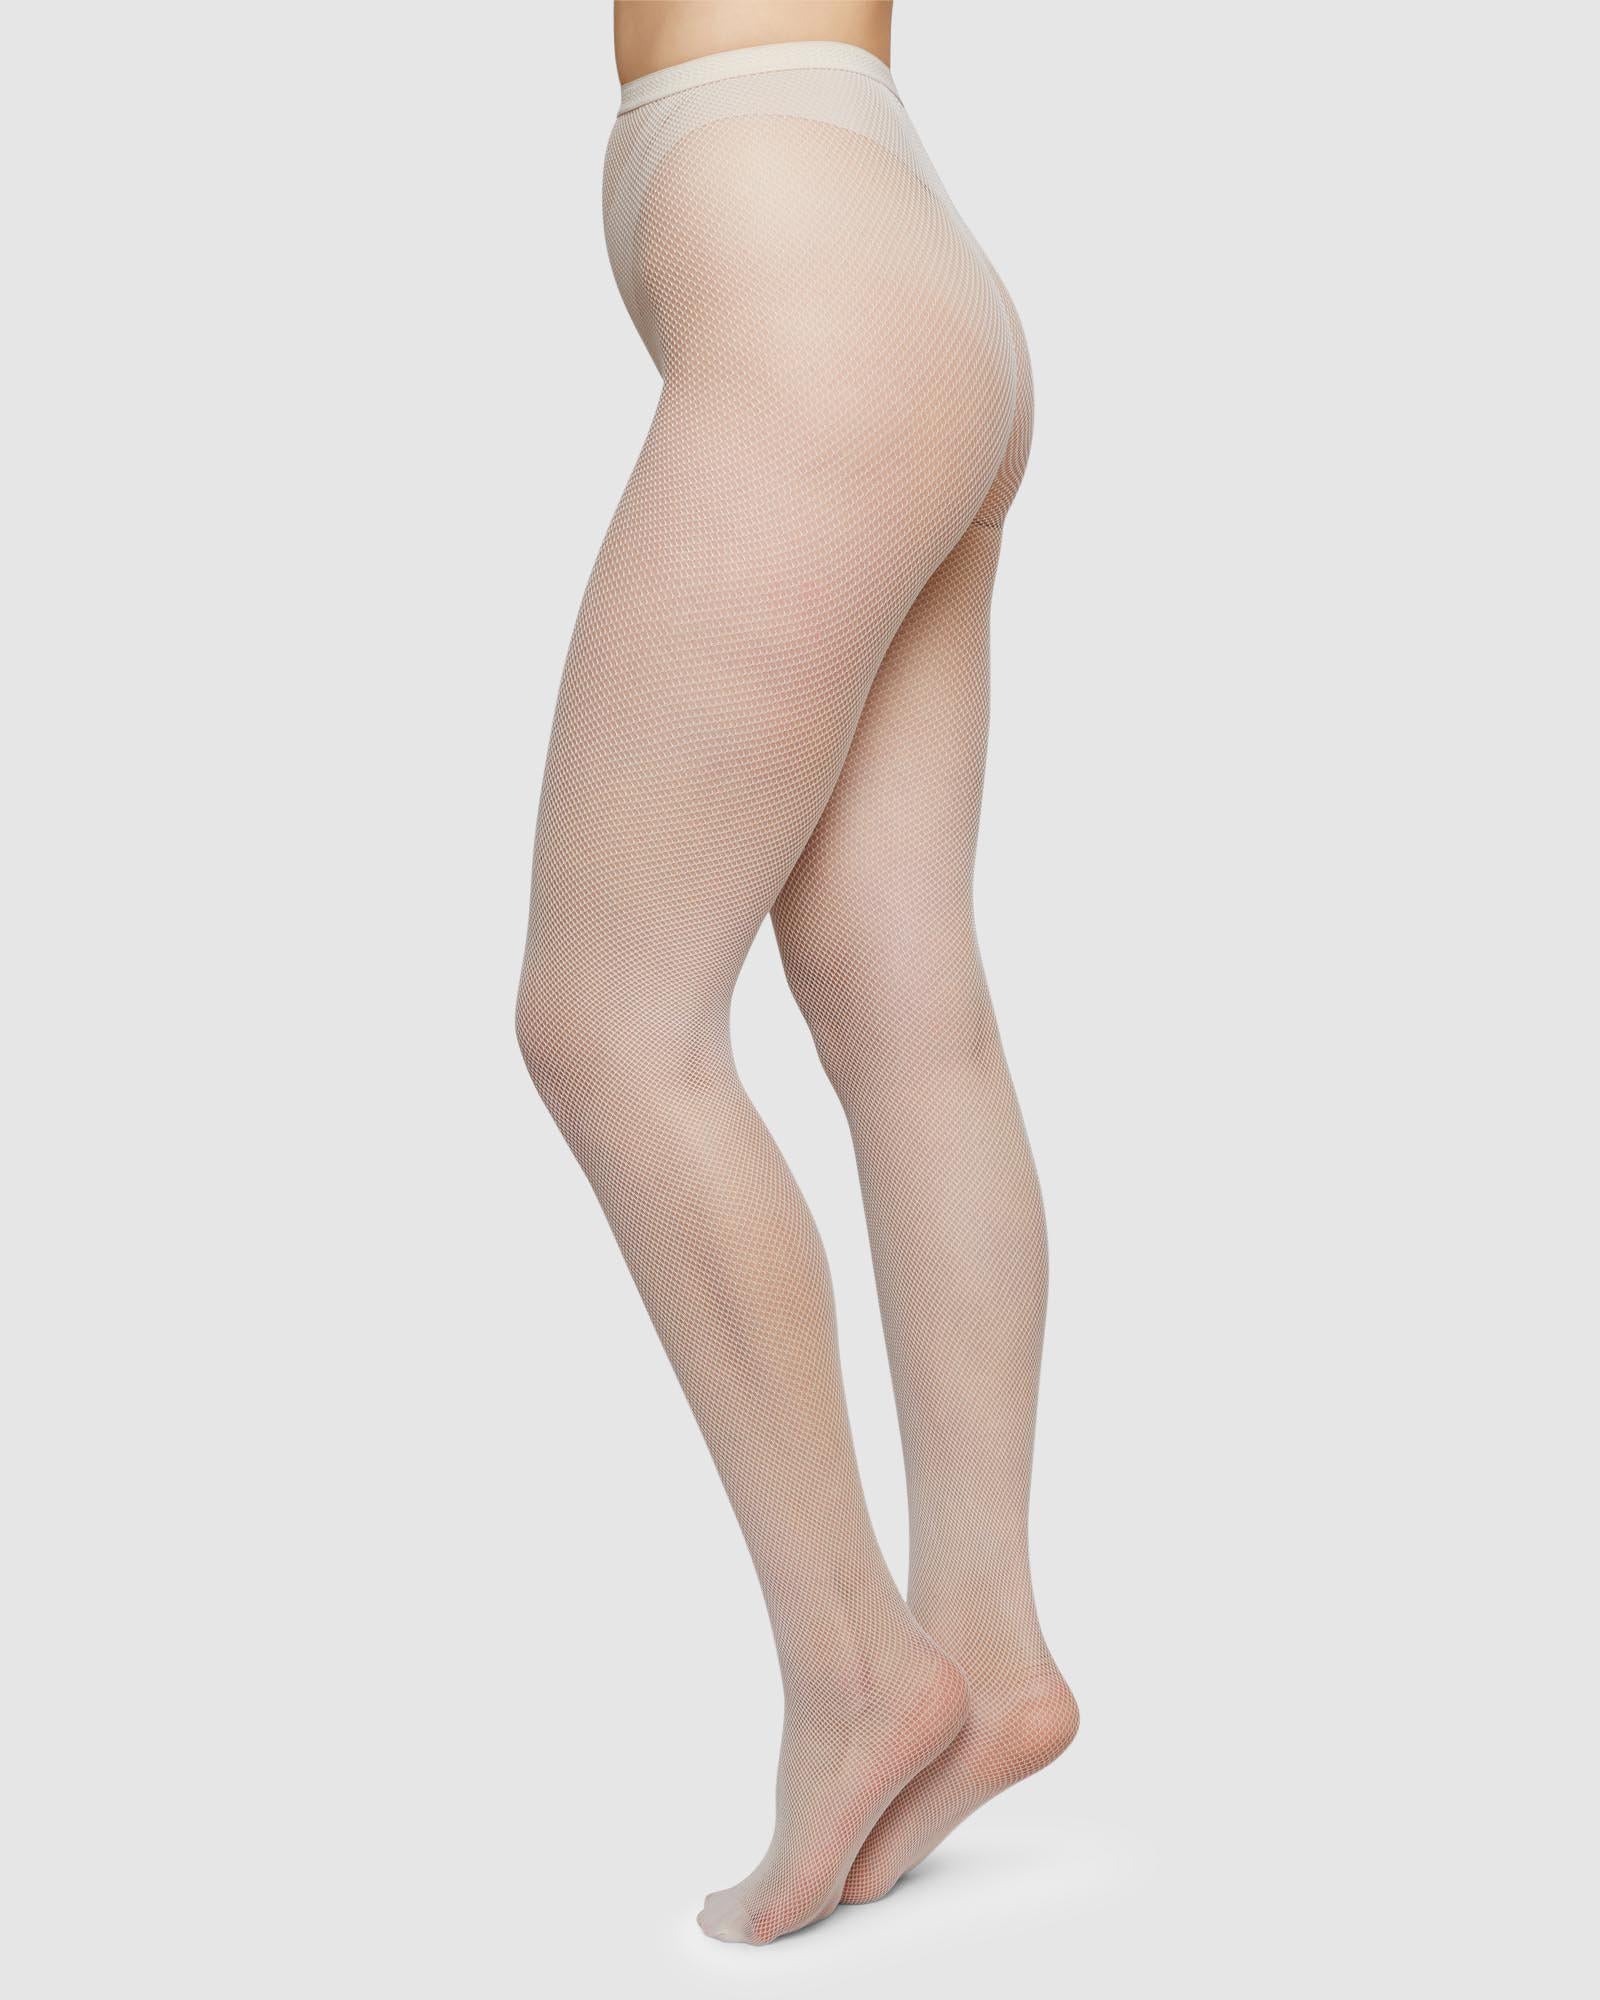 Elvira Net Tights Ivory | Shop now - Swedish Stockings